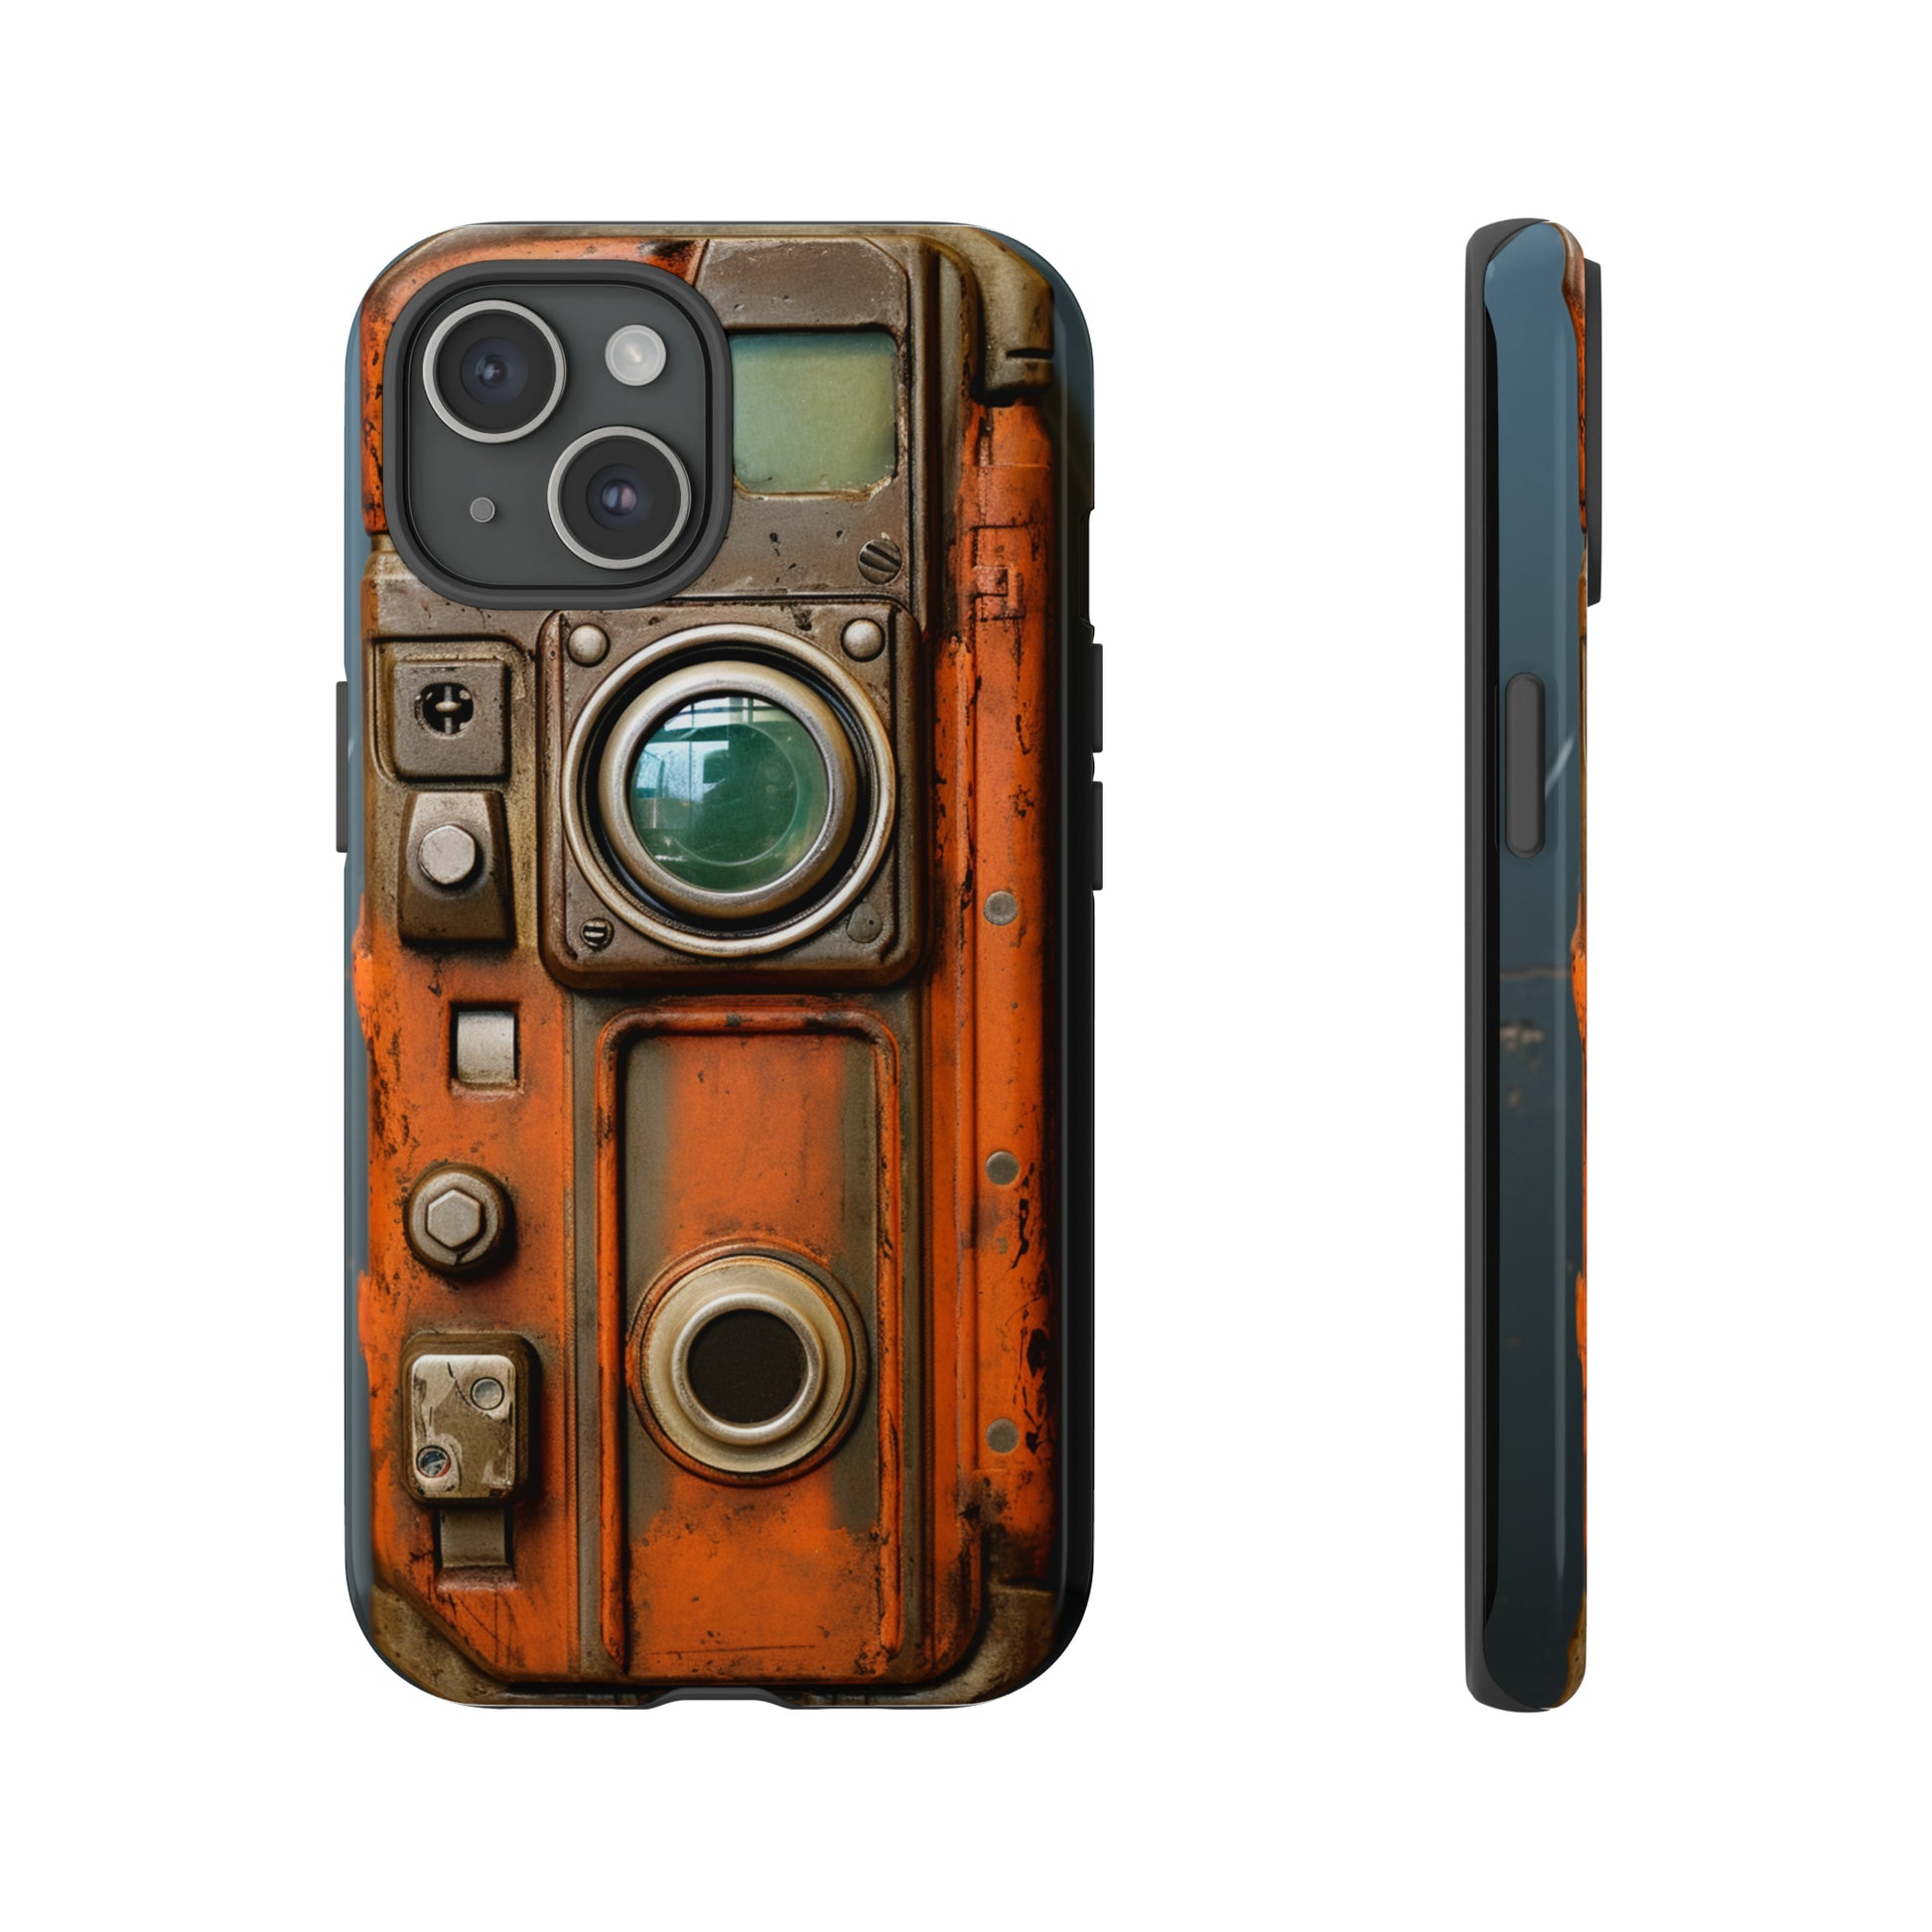 Cyberpunk walkie talkie design on iPhone 15 case